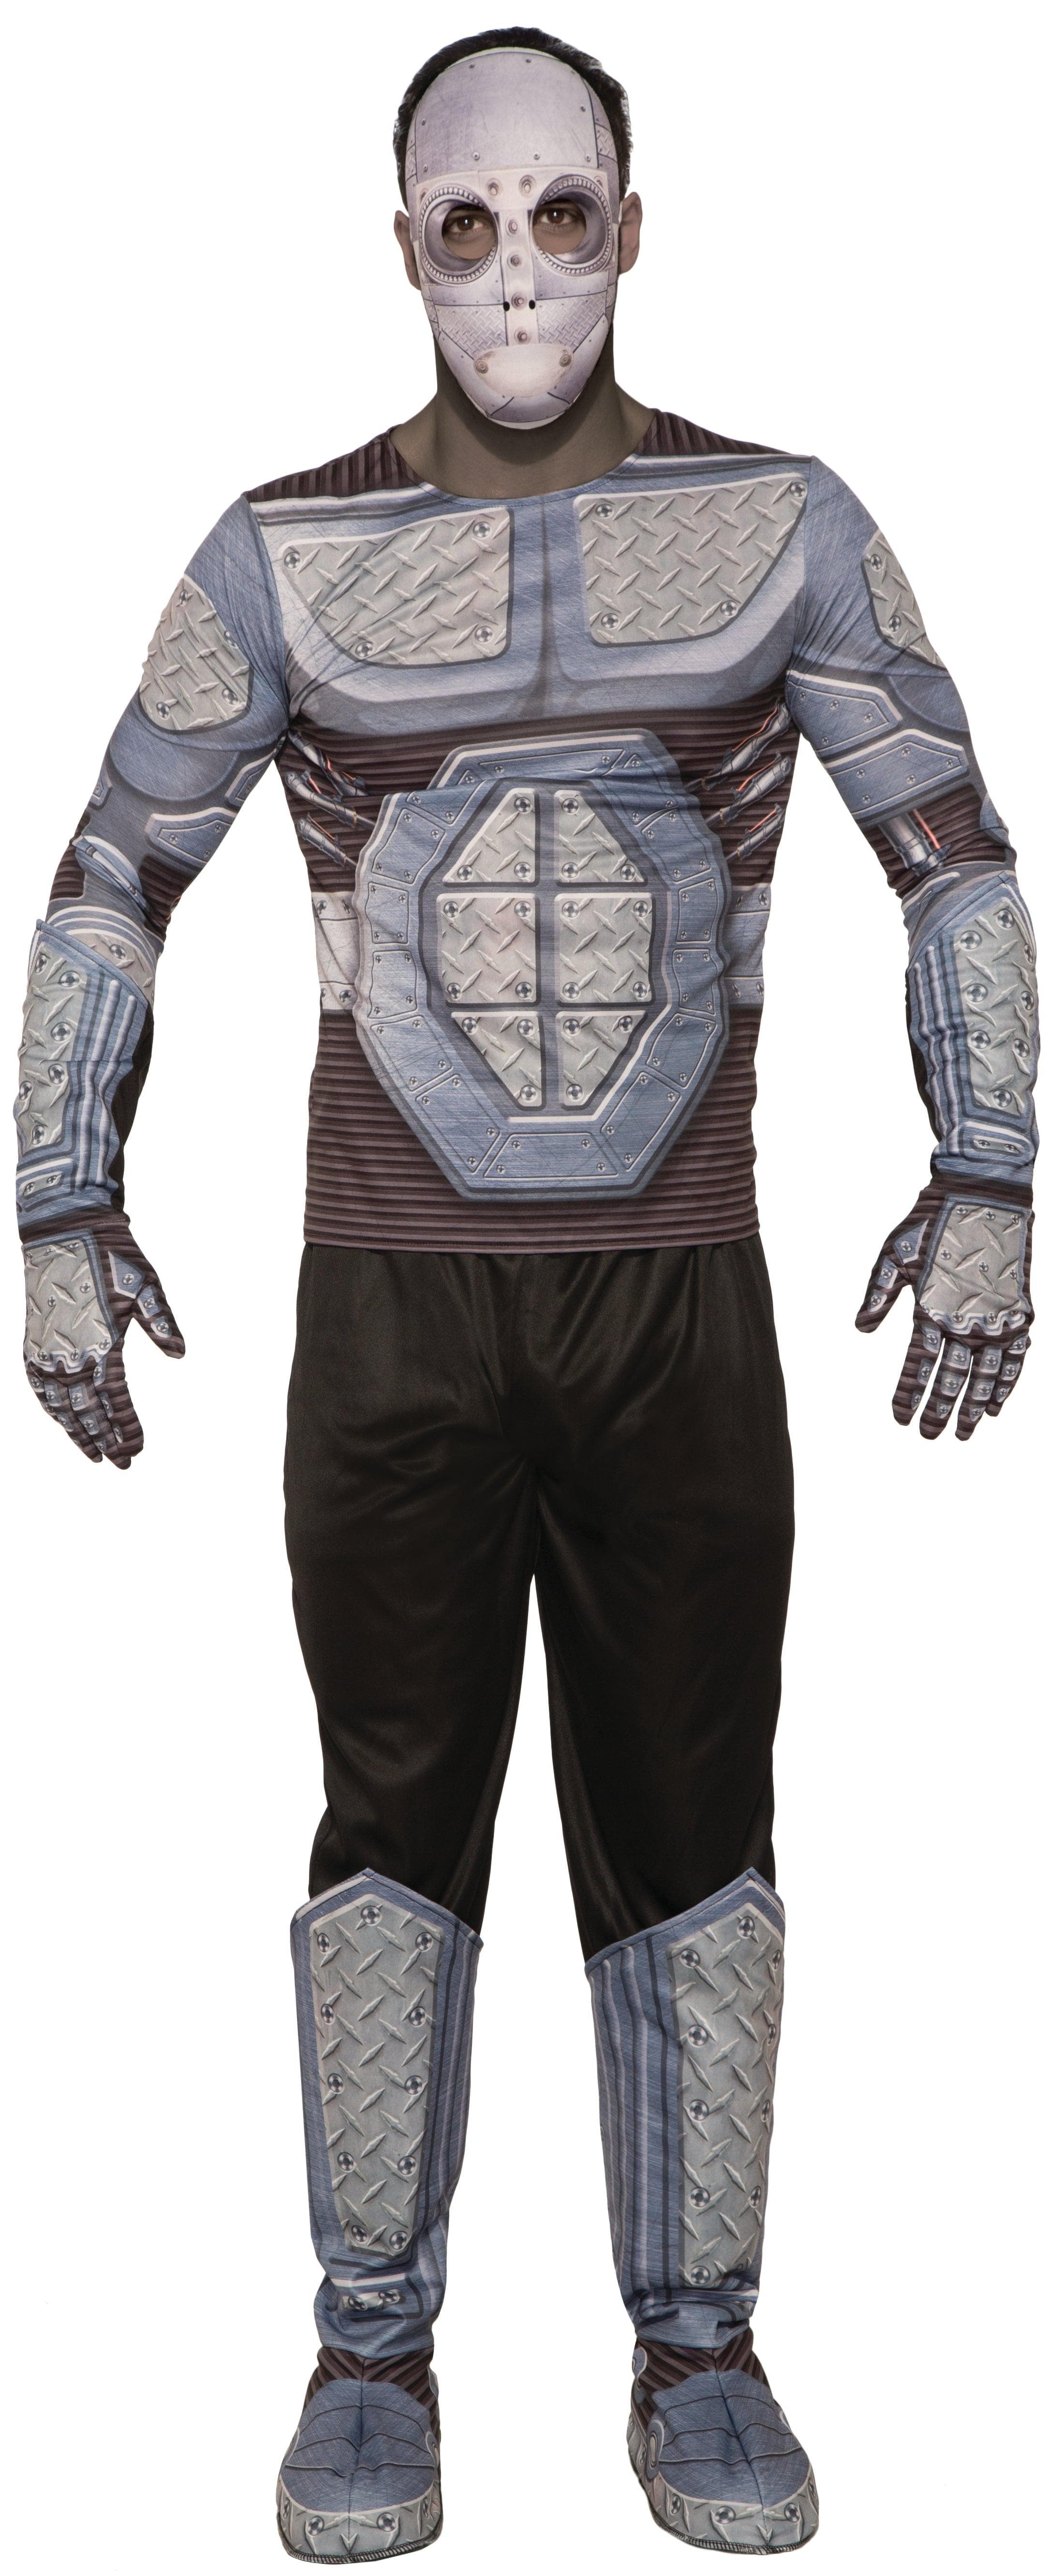 Adult Robot Shirt Costume - costumes.com